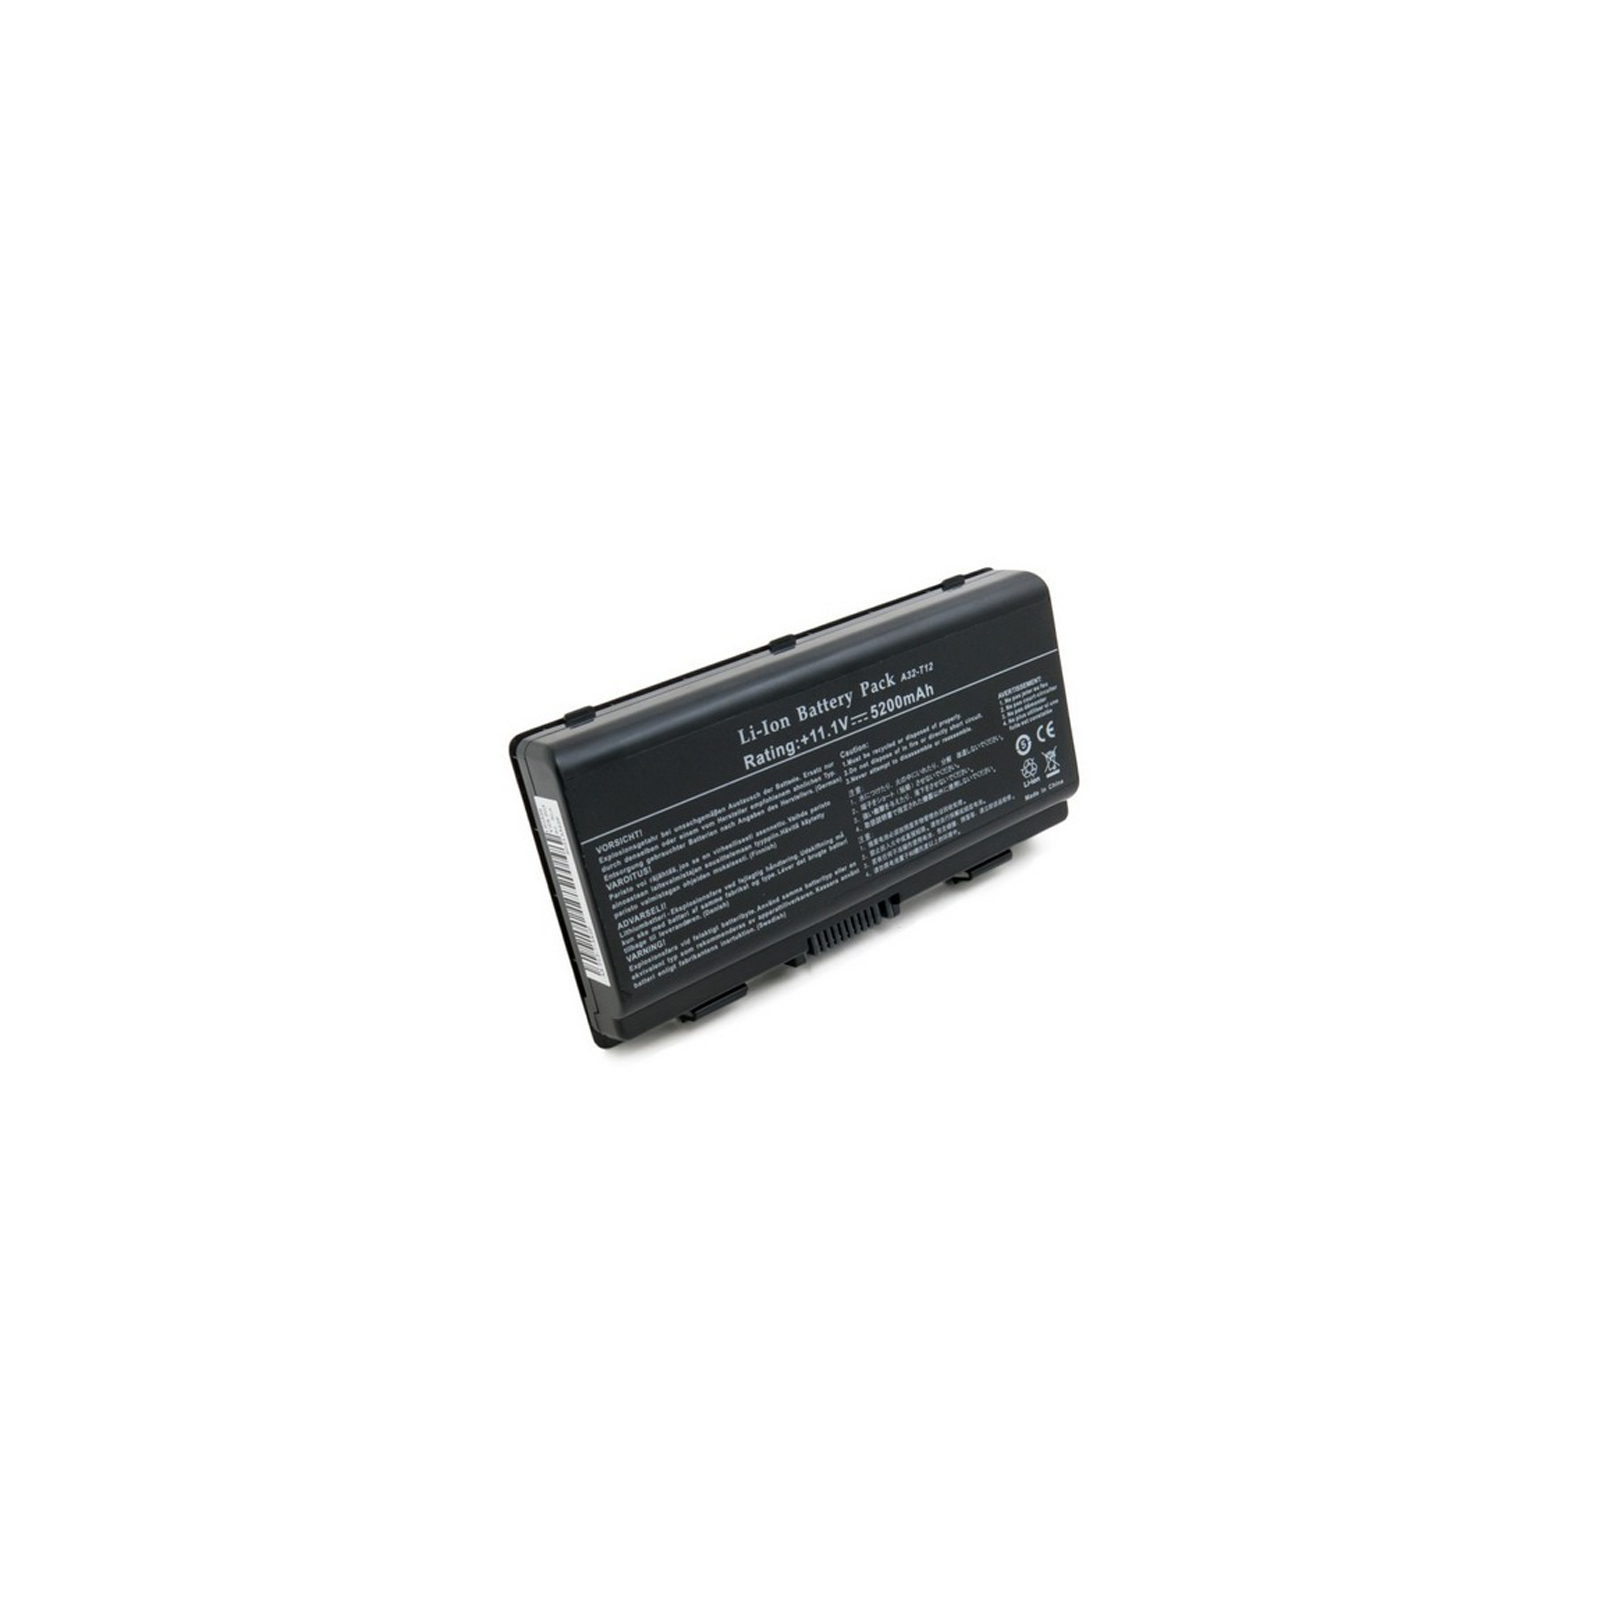 Аккумулятор для ноутбука Asus X51 (A32-T12) 11.1V 5200mAh Extradigital (BNA3972)